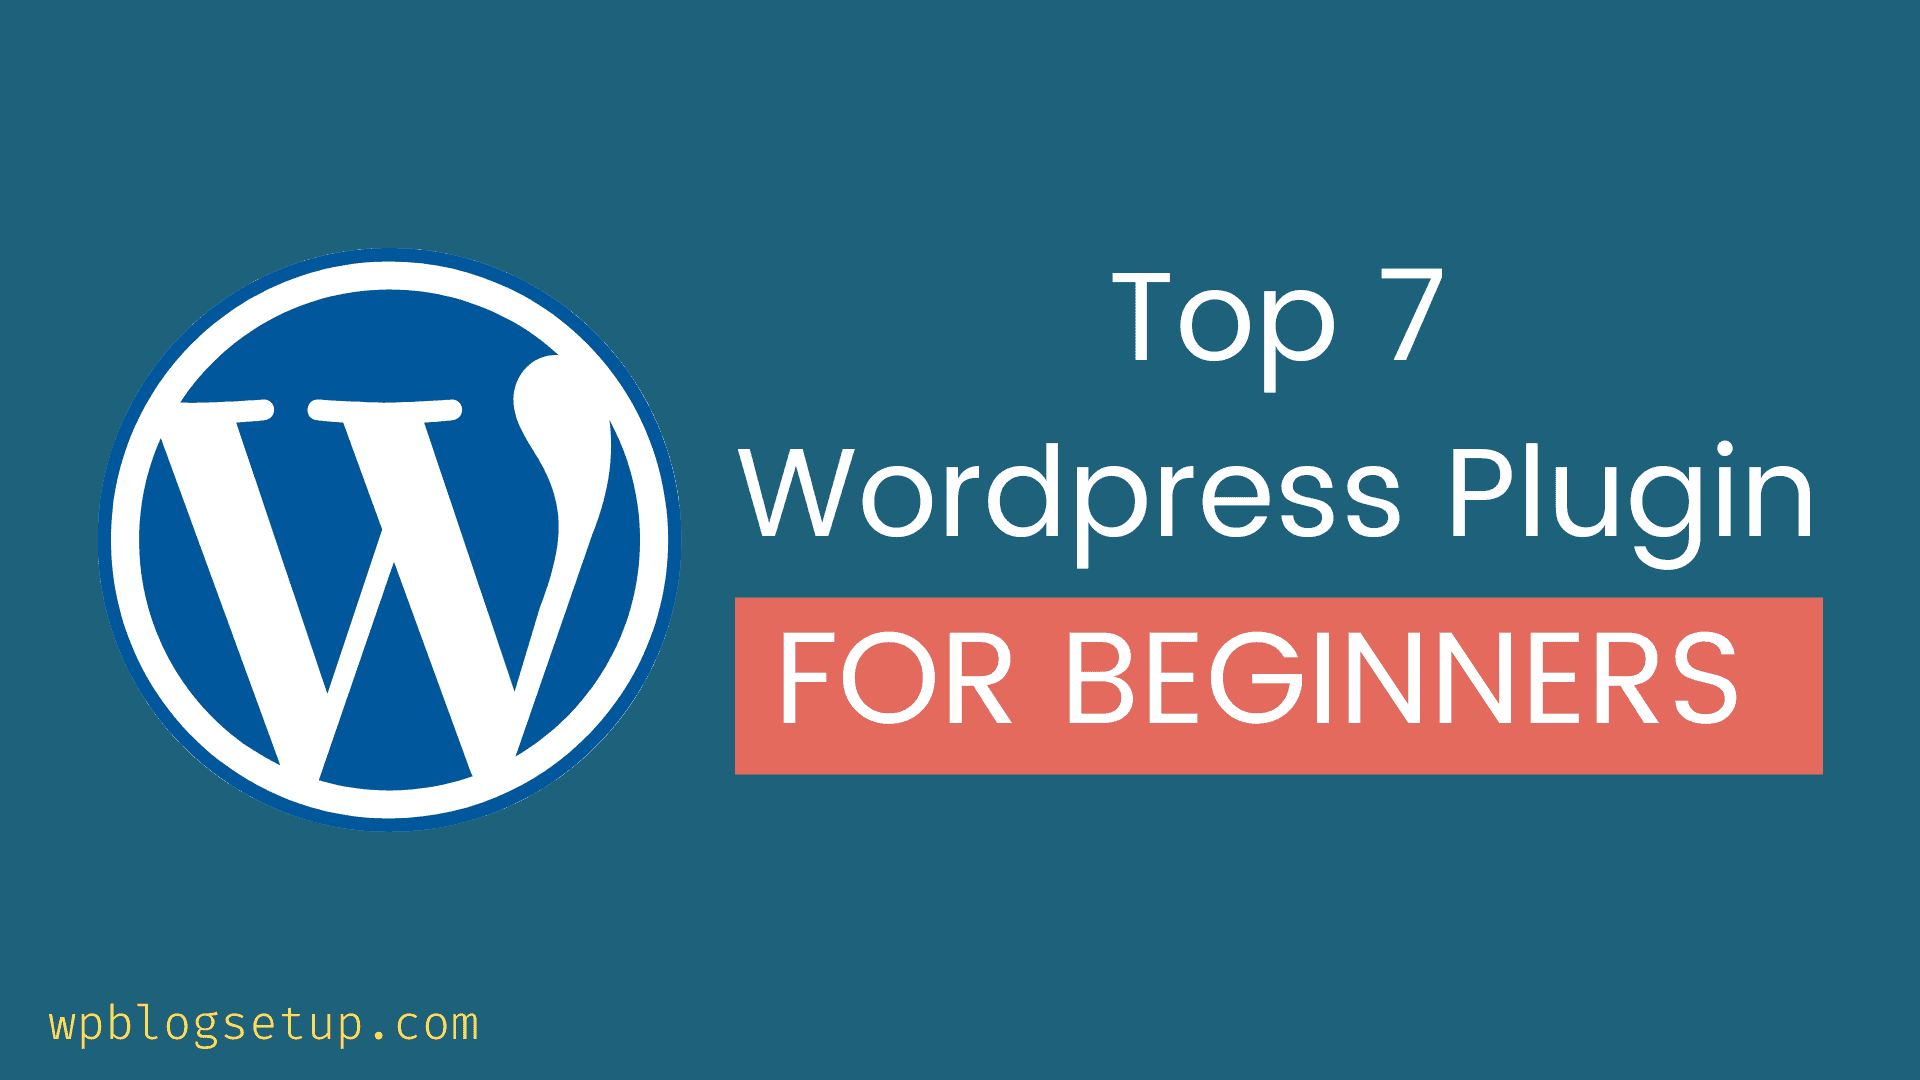 Must have WordPress plugin for beginners